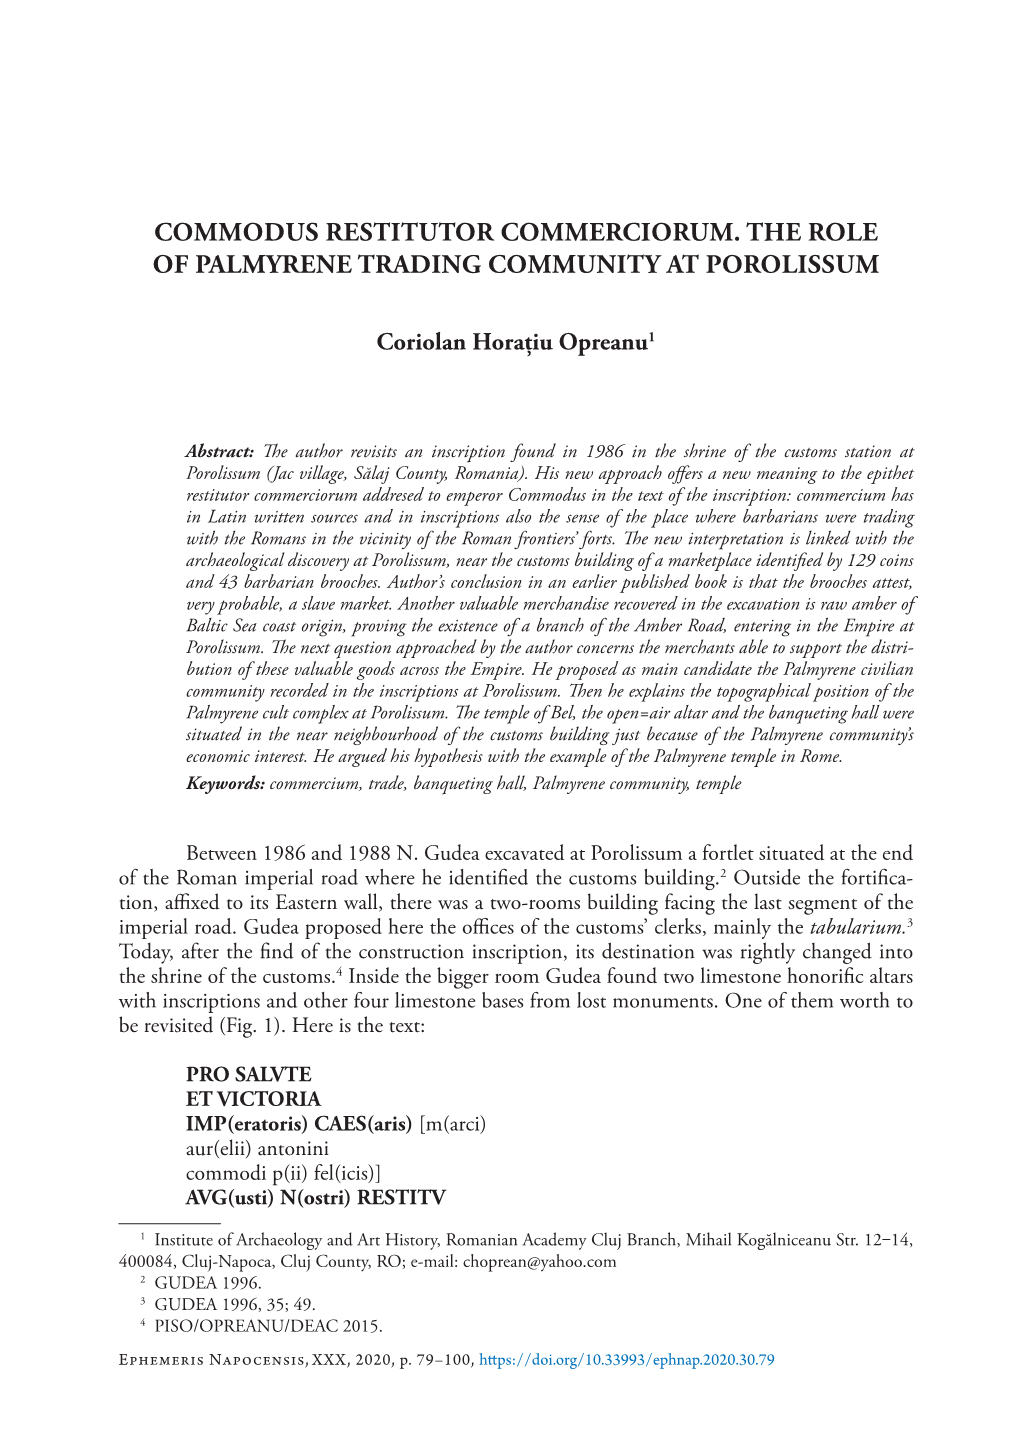 Commodus Restitutor Commerciorum. the Role of Palmyrene Trading Community at Porolissum